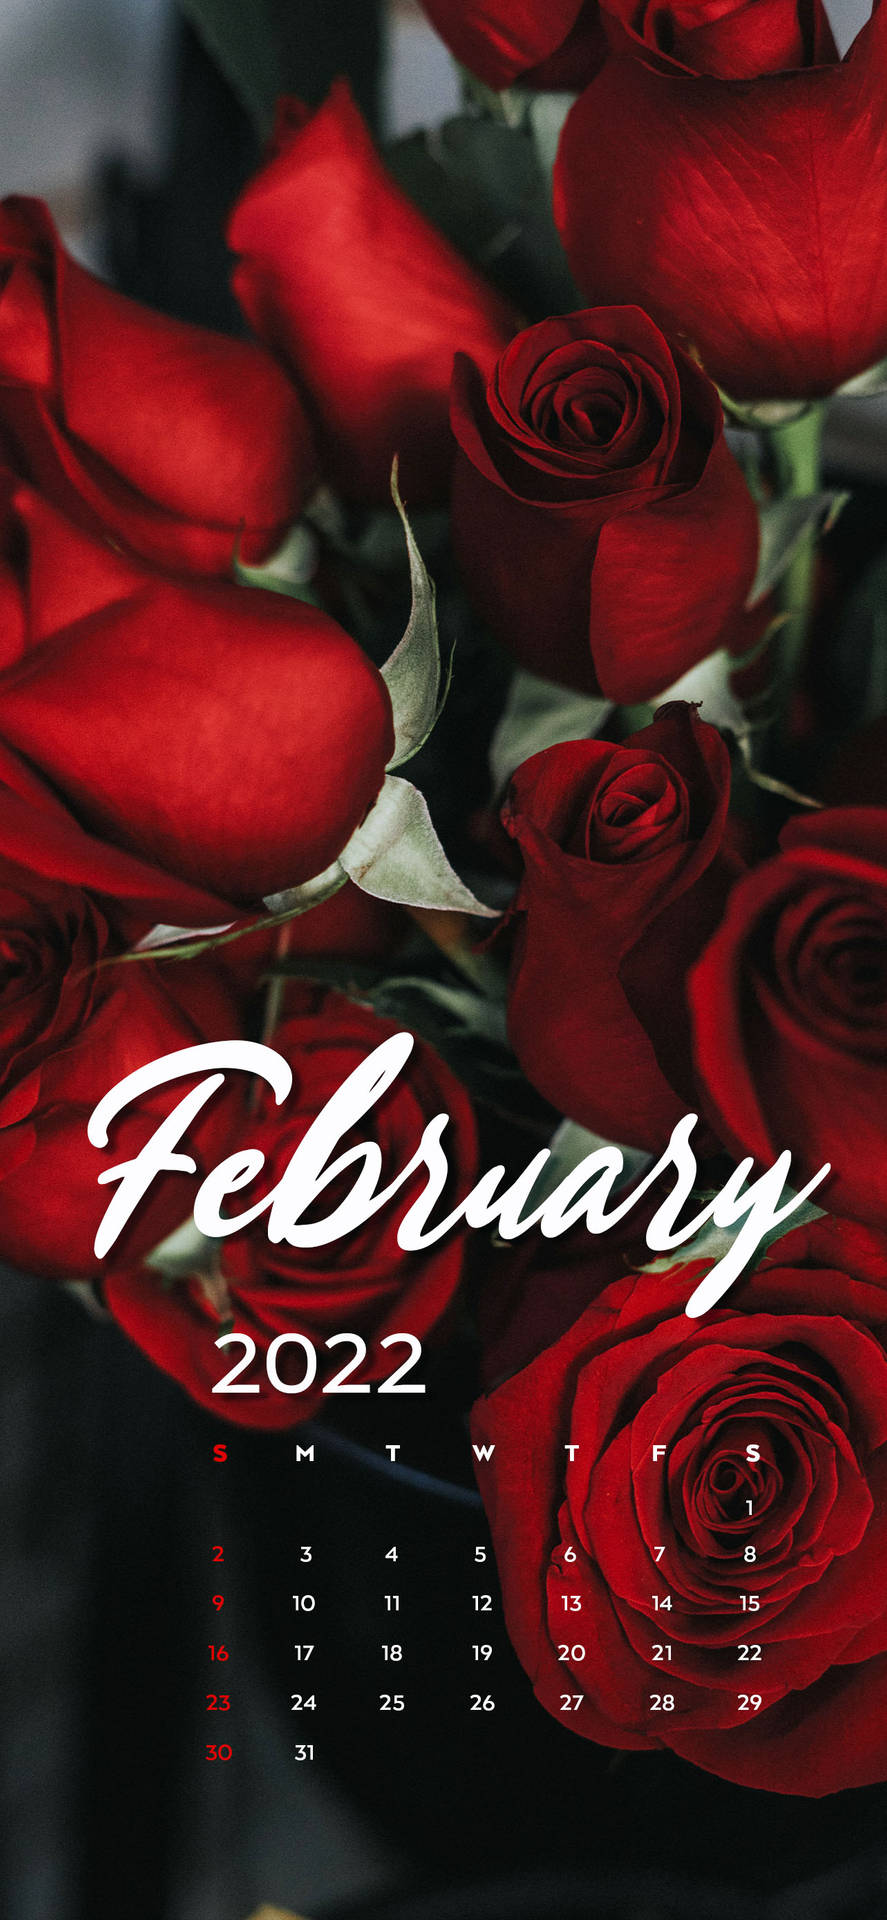 February 2022 Red Roses Calendar Background